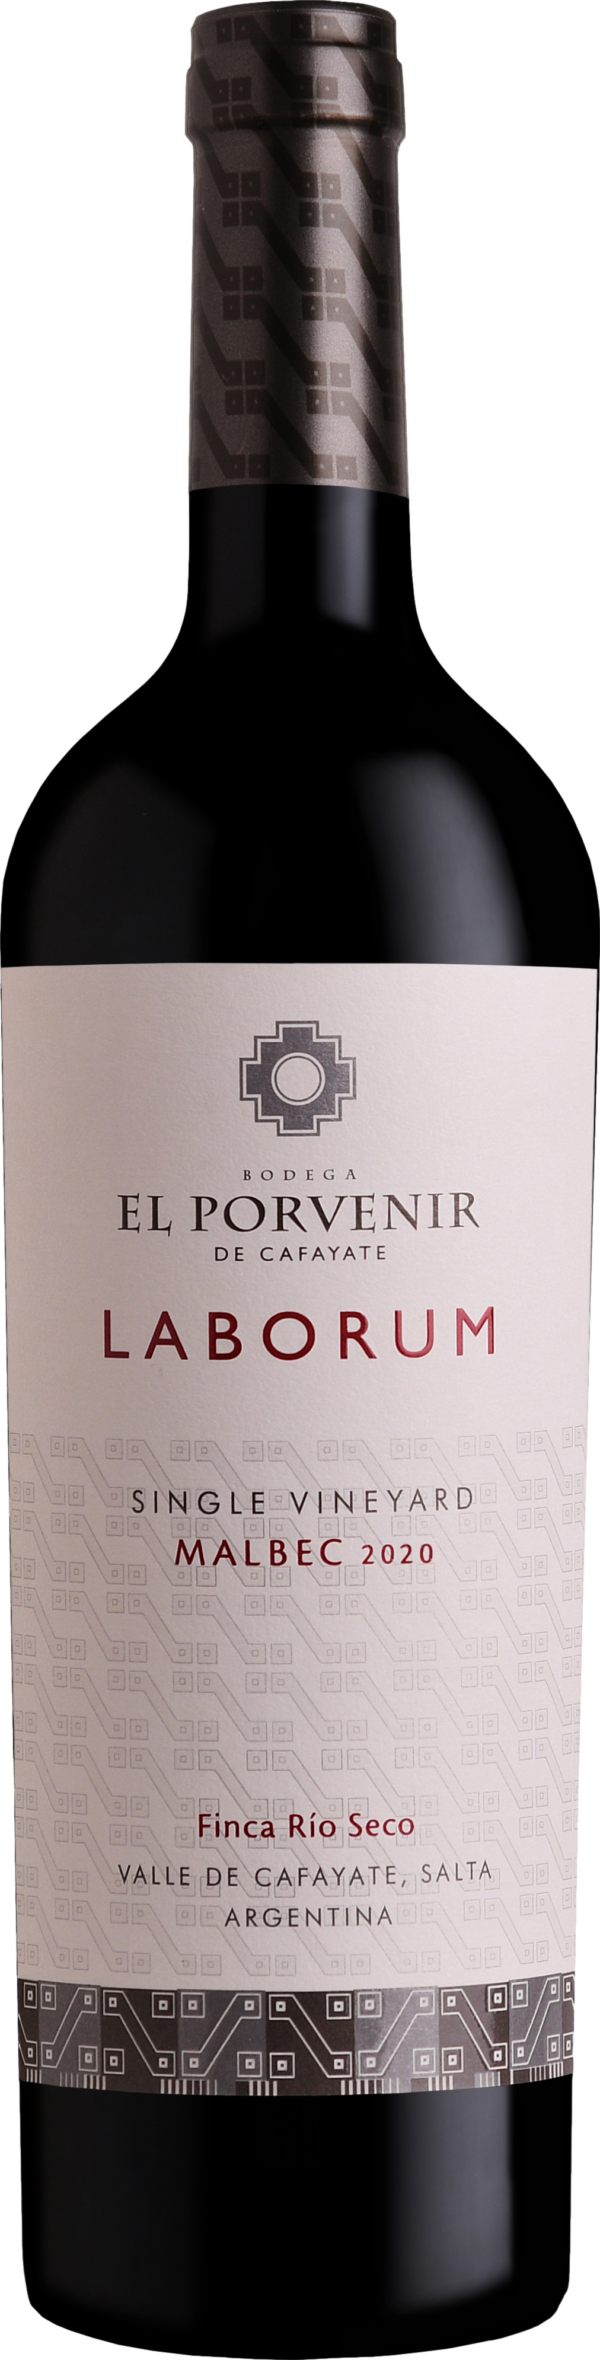 Product image of El Porvenir de Cafayate Laborum Single Vineyard Malbec 2020 from 8wines